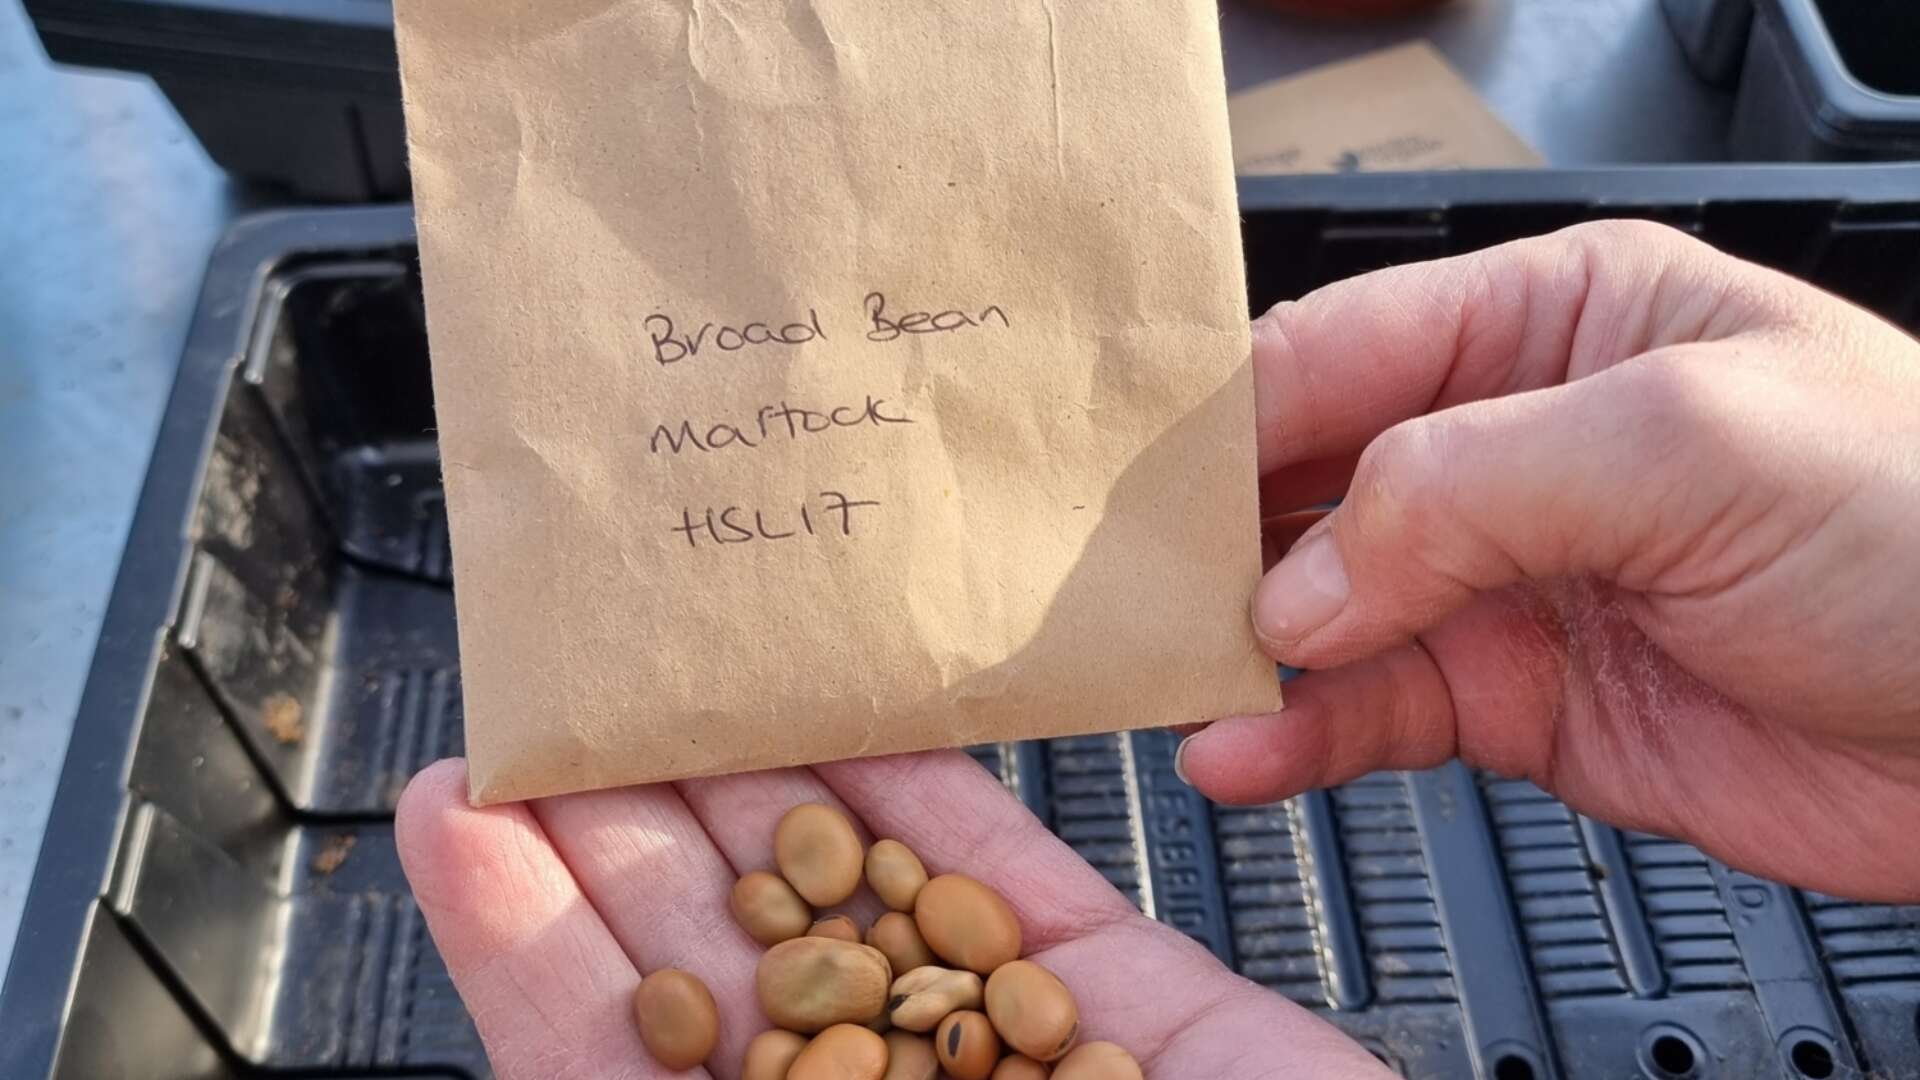 Saving seeds of broad bean matlock